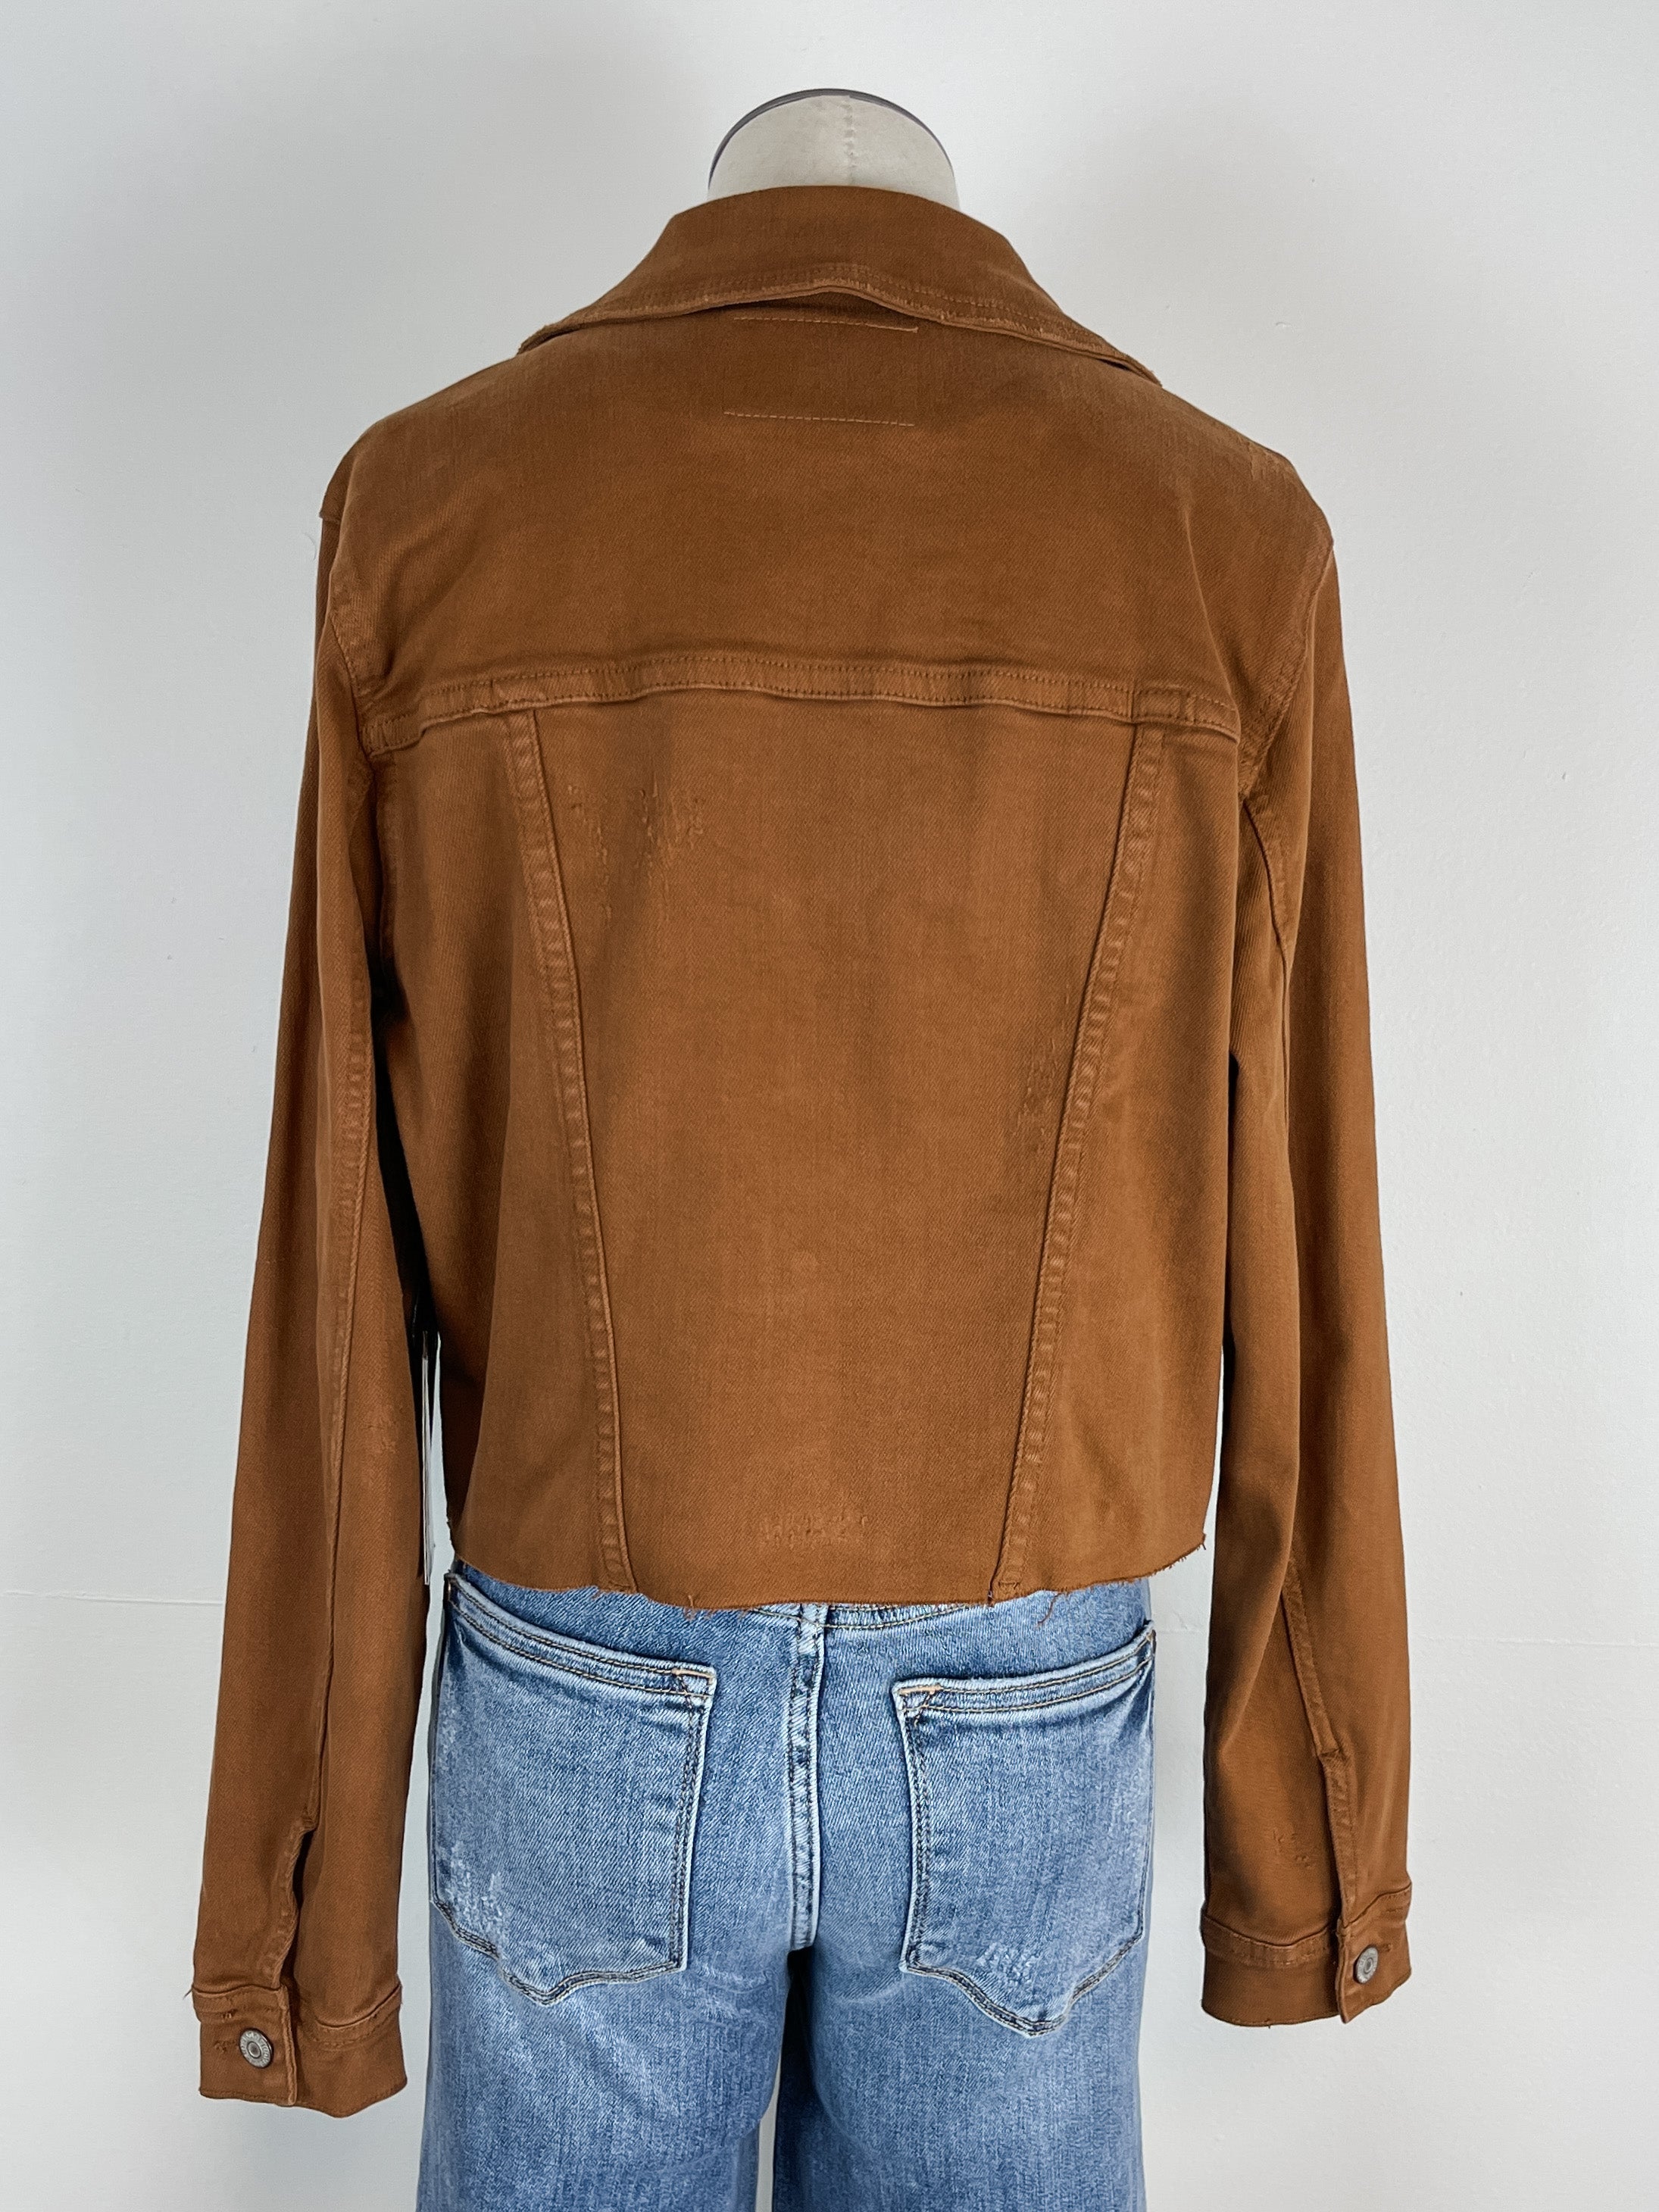 Western Denim Jacket Dark Brown | Jacket outfit women, Brown denim jacket, Brown  jacket outfit